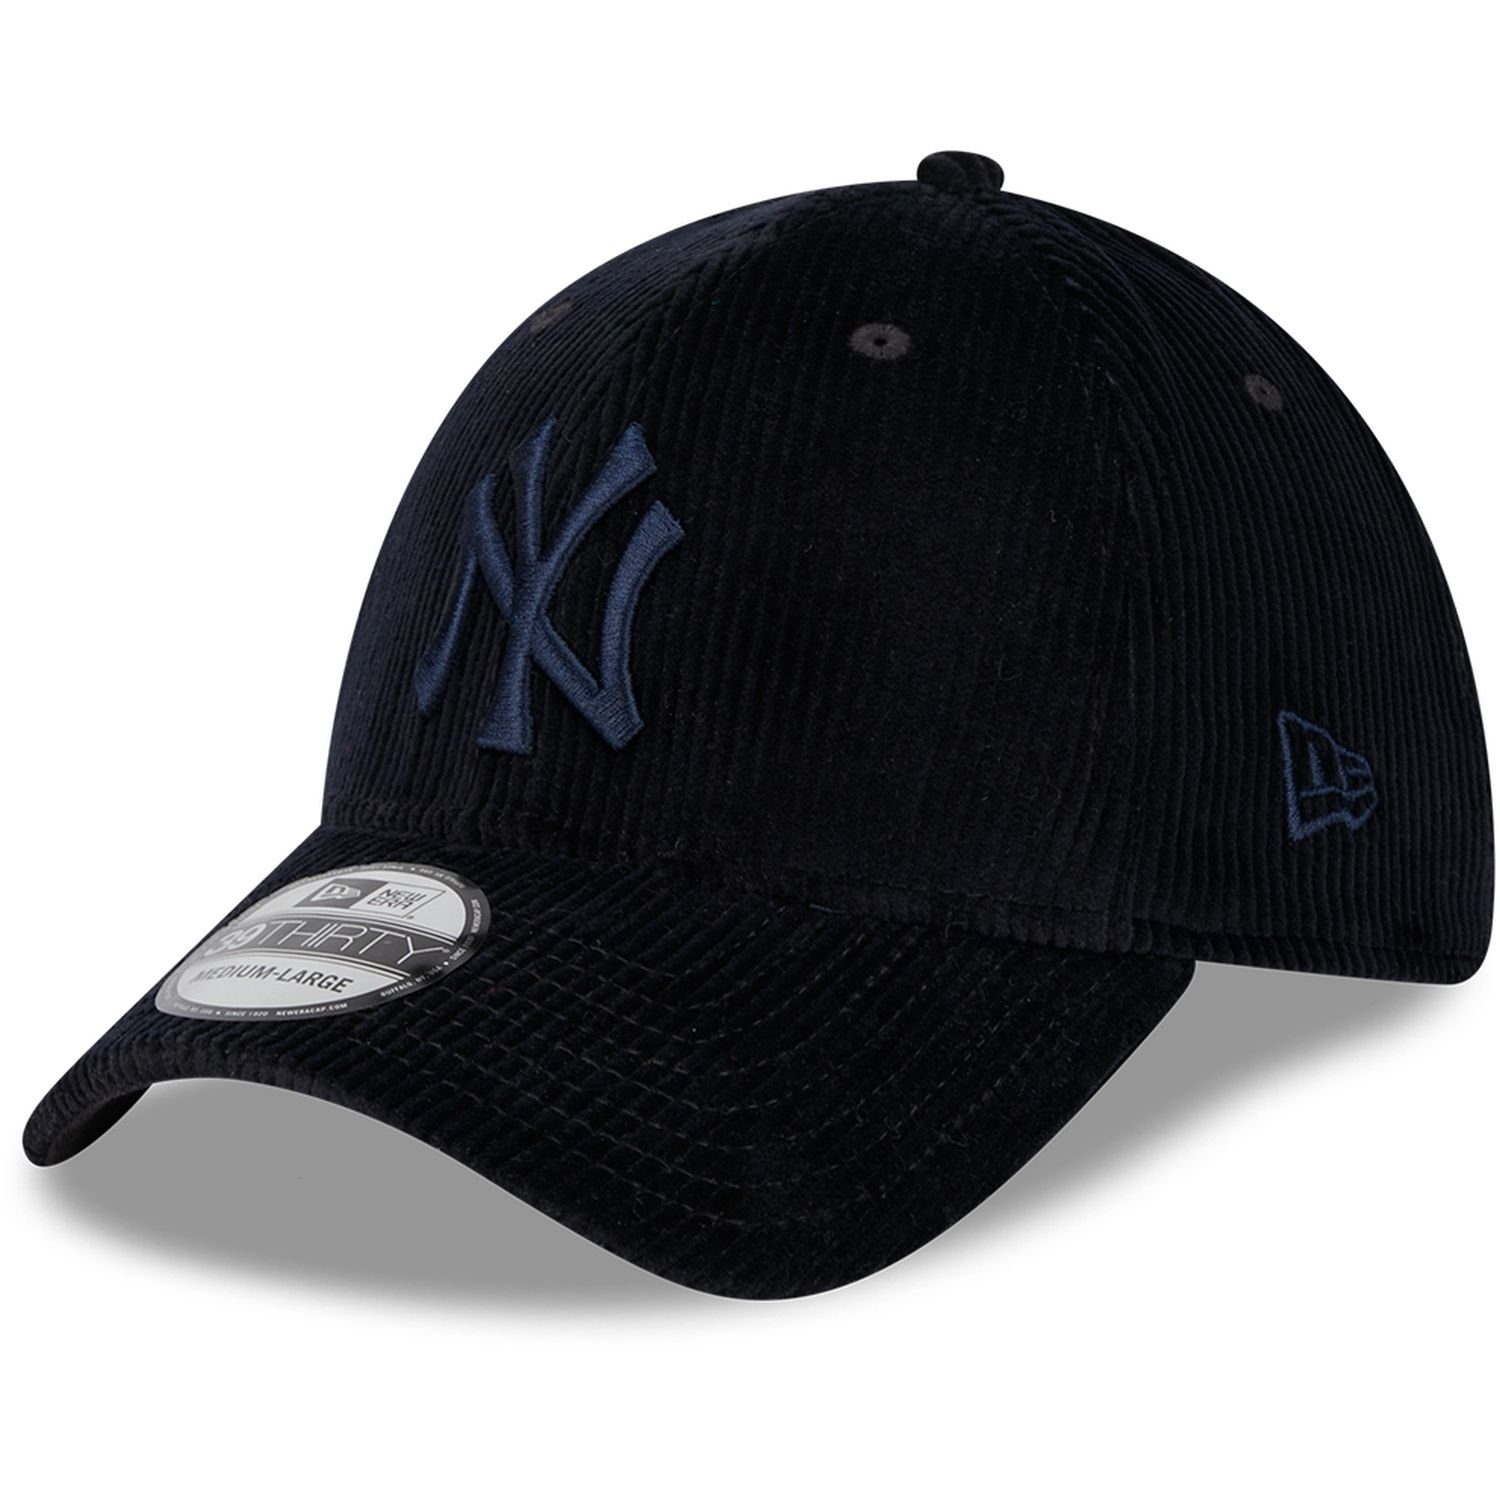 New Era Flex Cap 39Thirty Stretch WIDE KORD New York Yankees